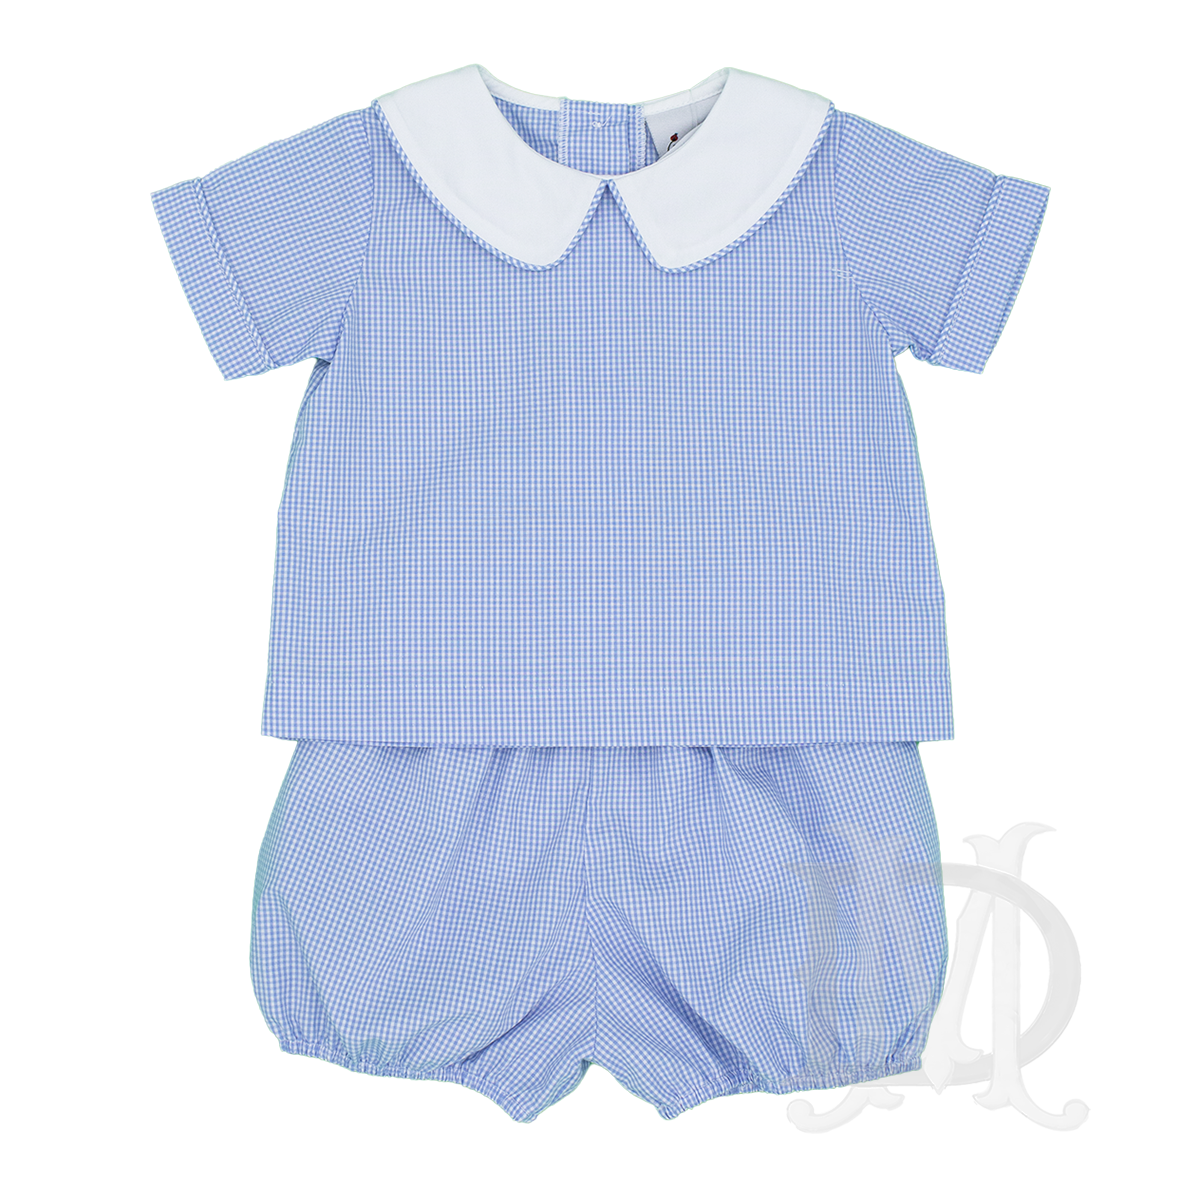 Blue Gingham Baby Boy's Shorts Set by Delaney